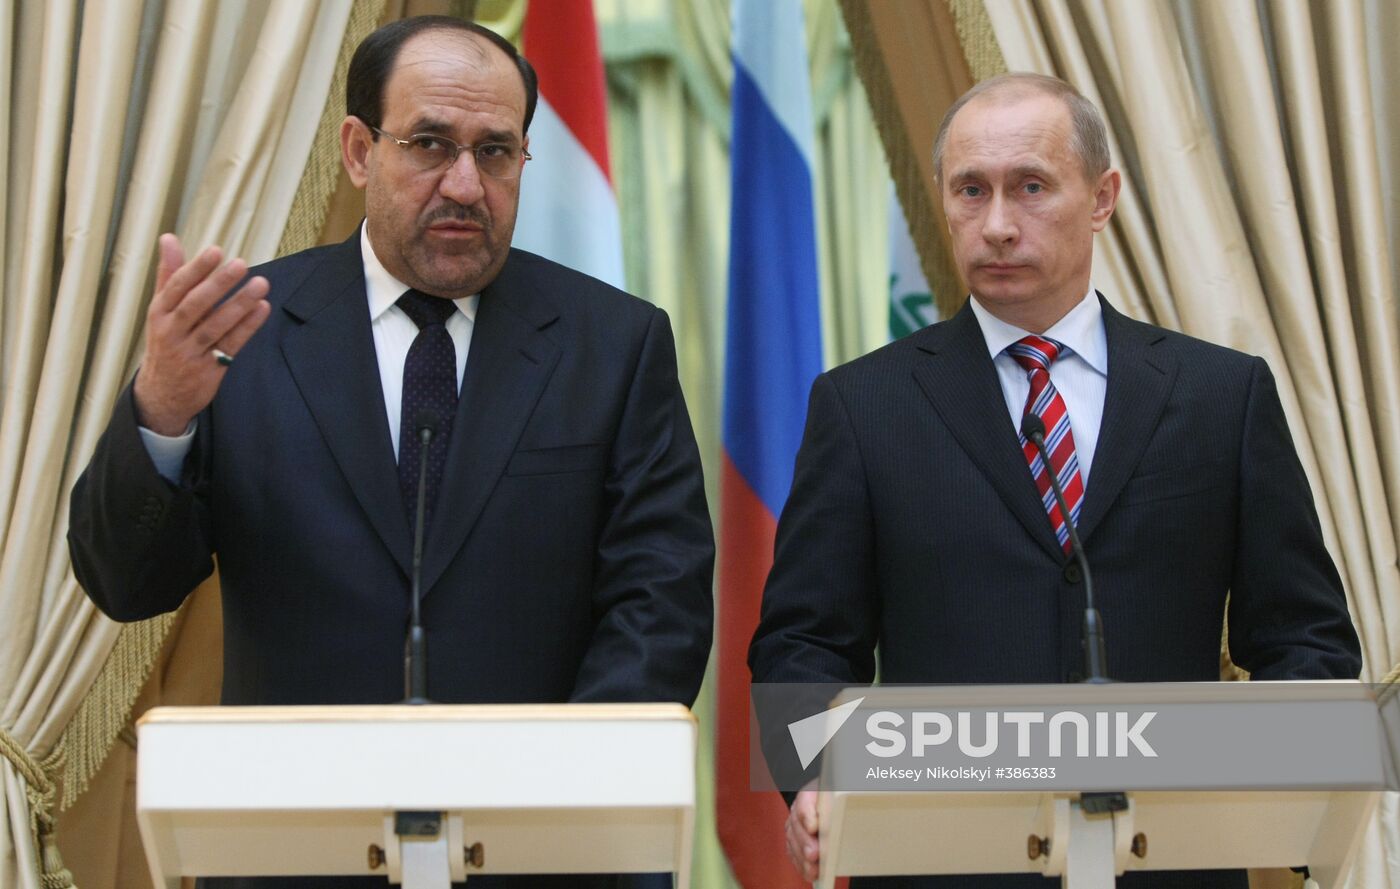 Prime Minister Vladimir Putin meets with Nouri al-Maliki